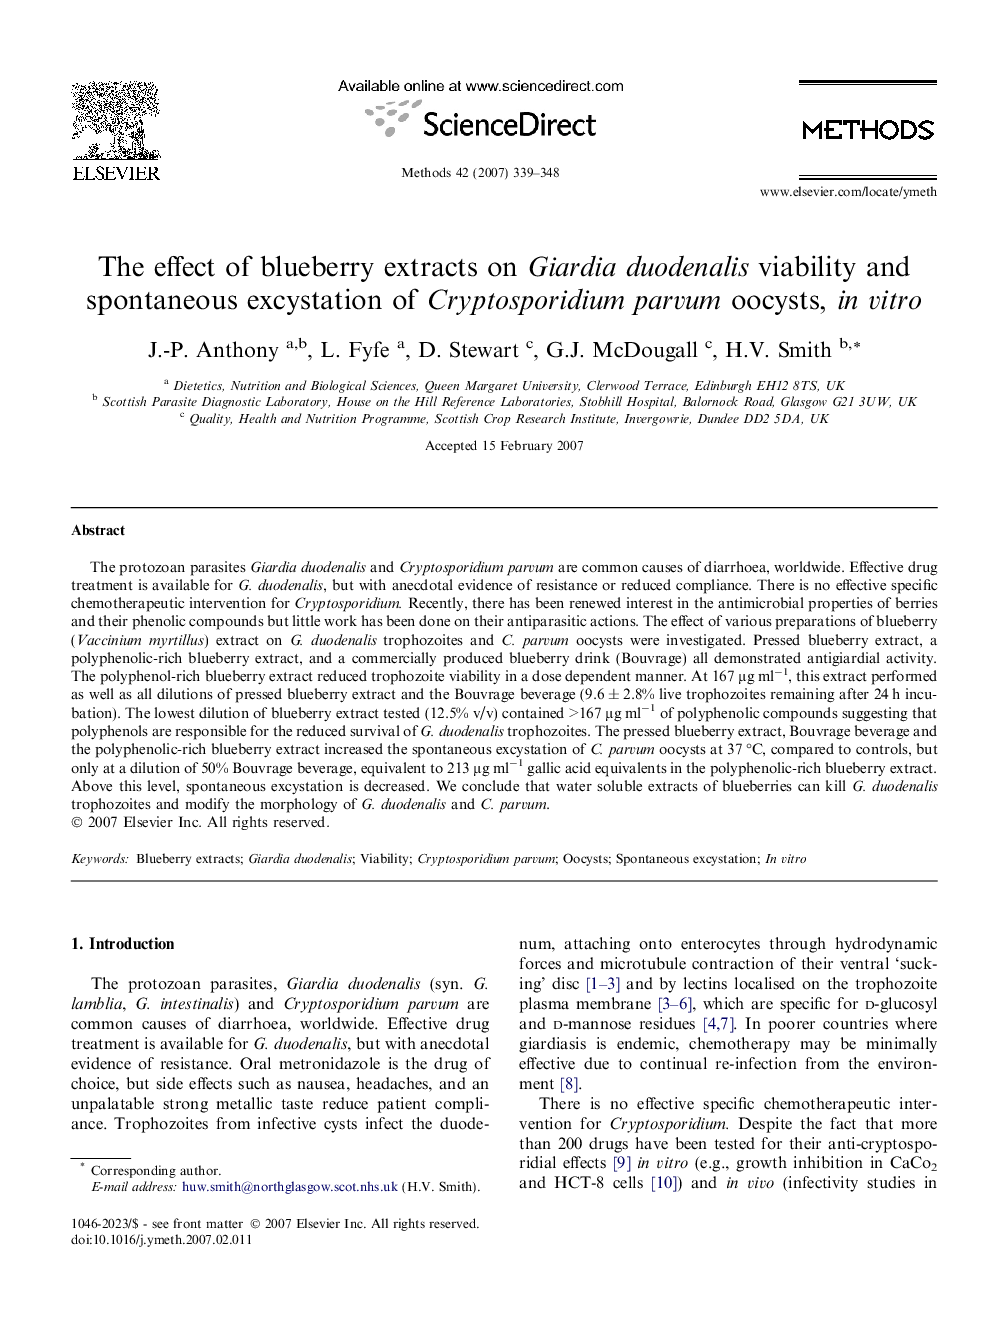 The effect of blueberry extracts on Giardia duodenalis viability and spontaneous excystation of Cryptosporidium parvum oocysts, in vitro